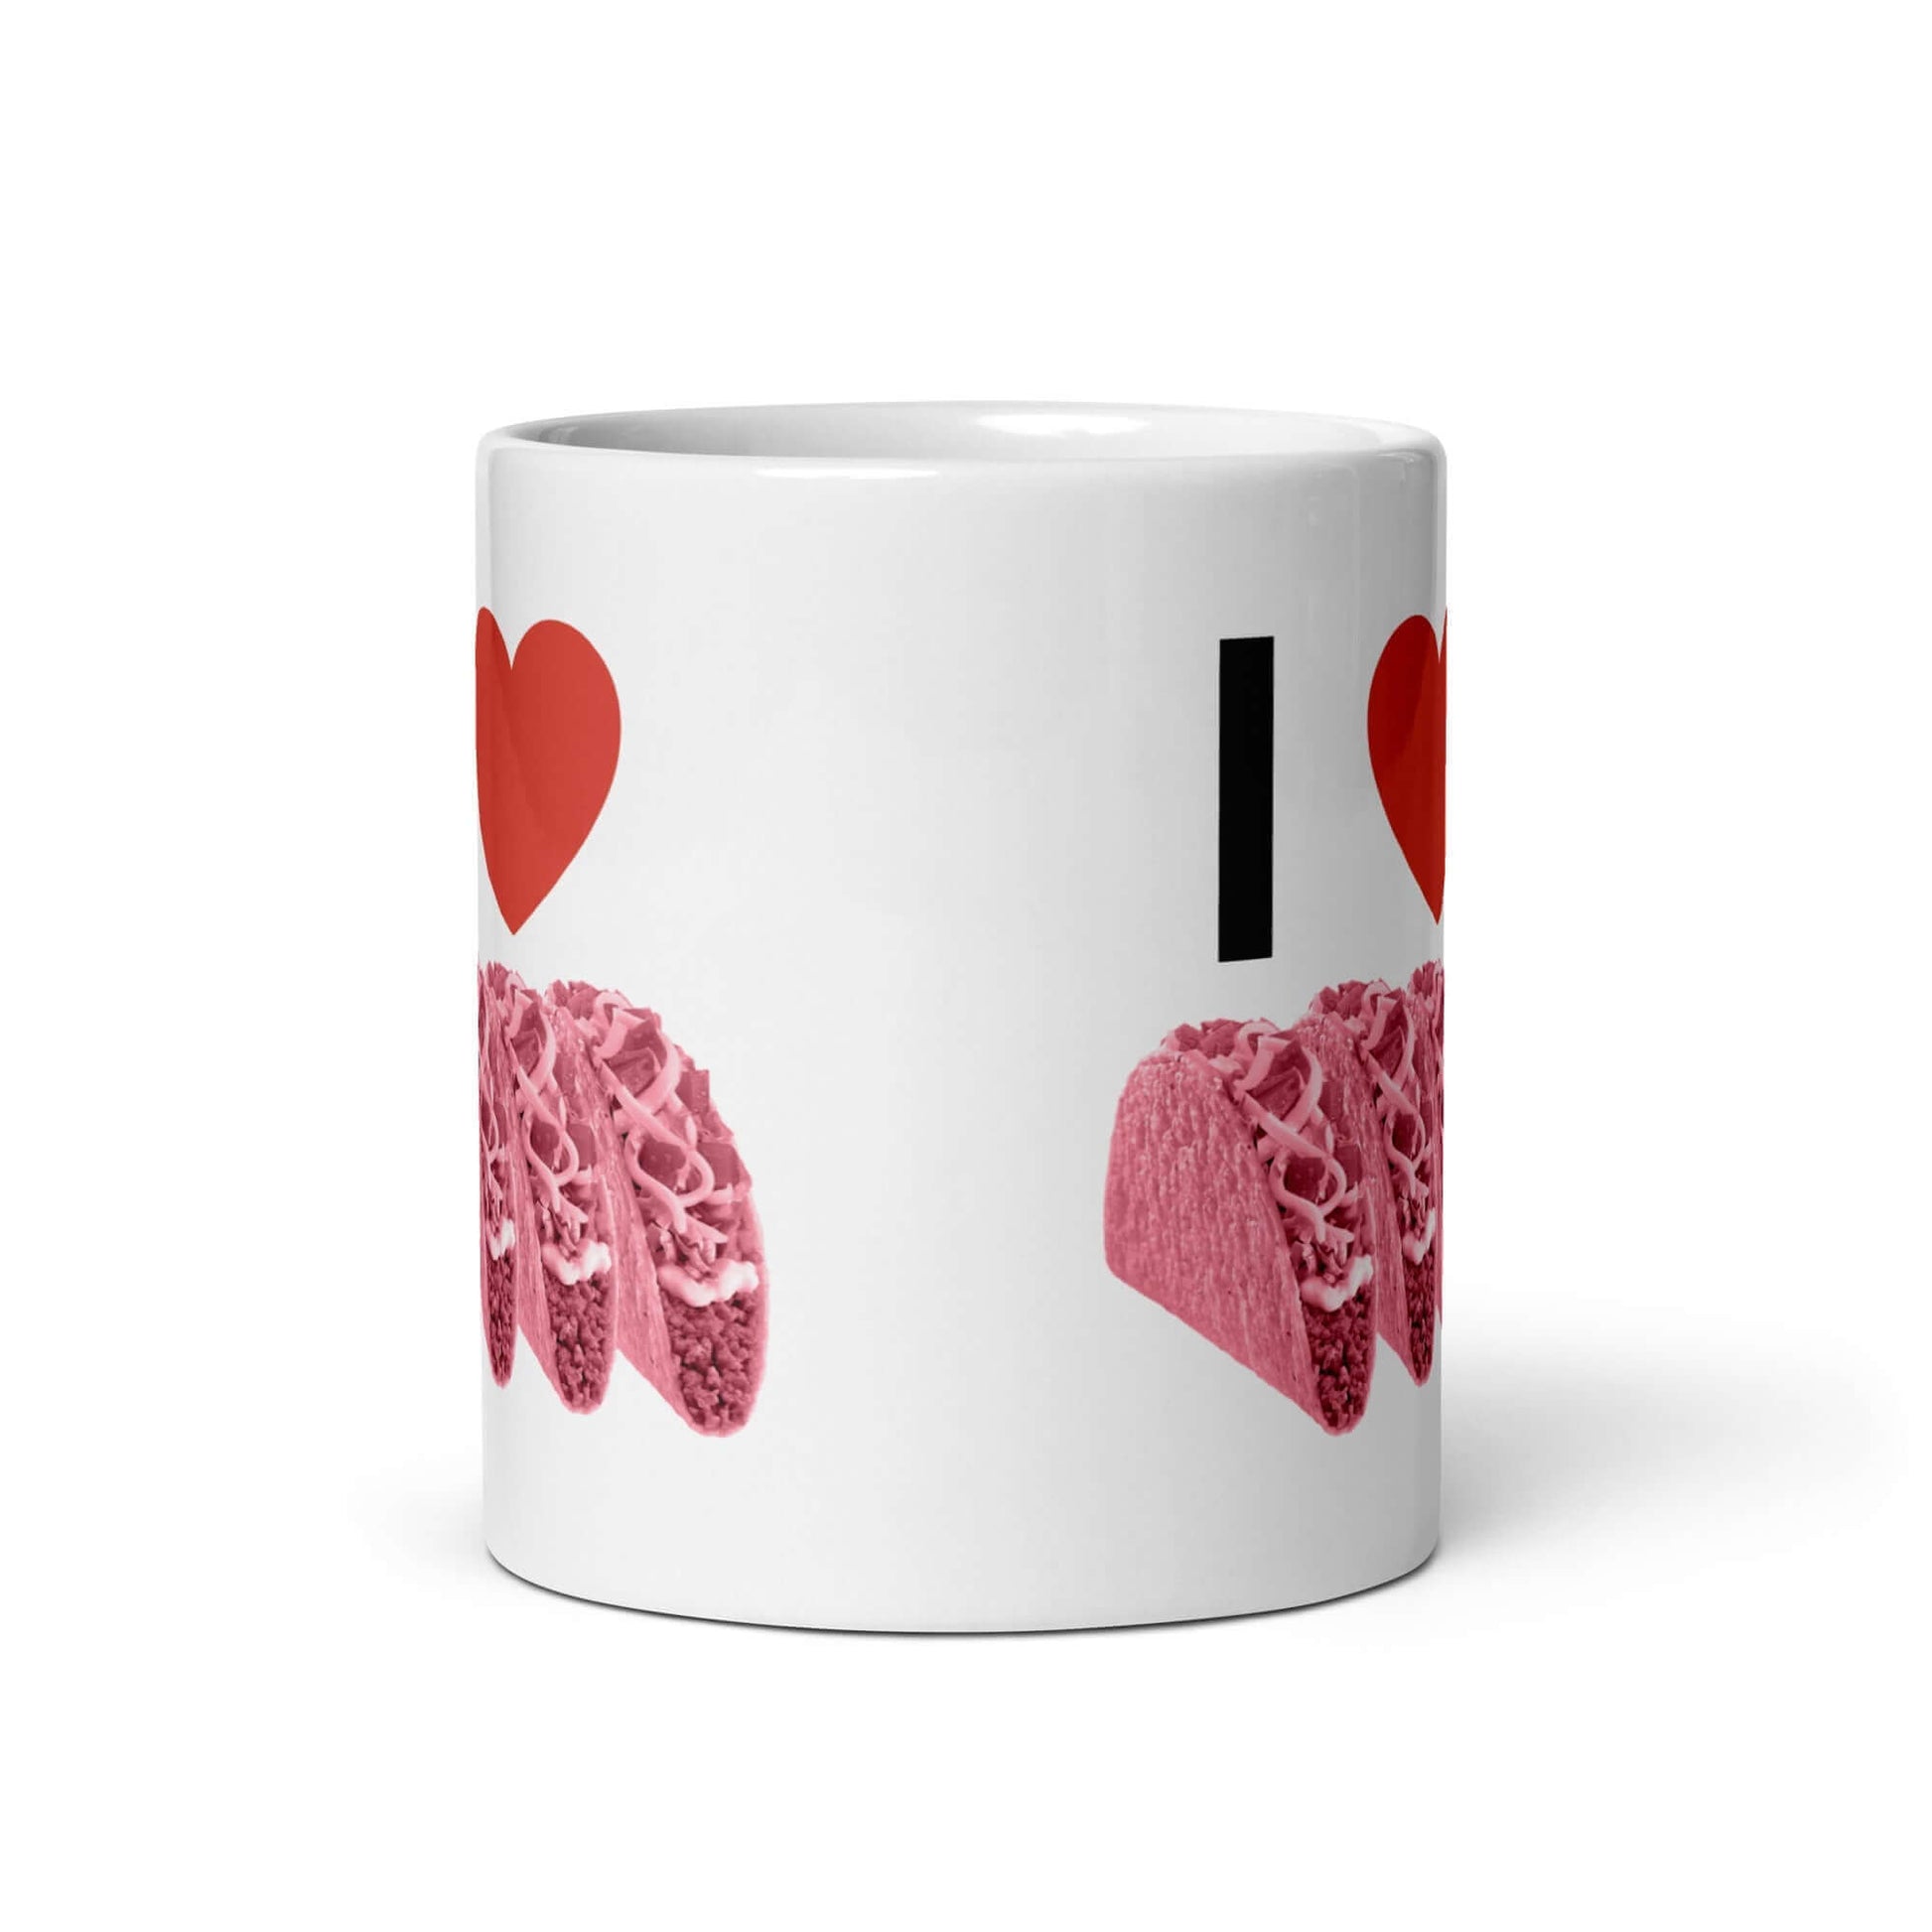 I LOVE pink tacos - White glossy mug - Horrible Designs